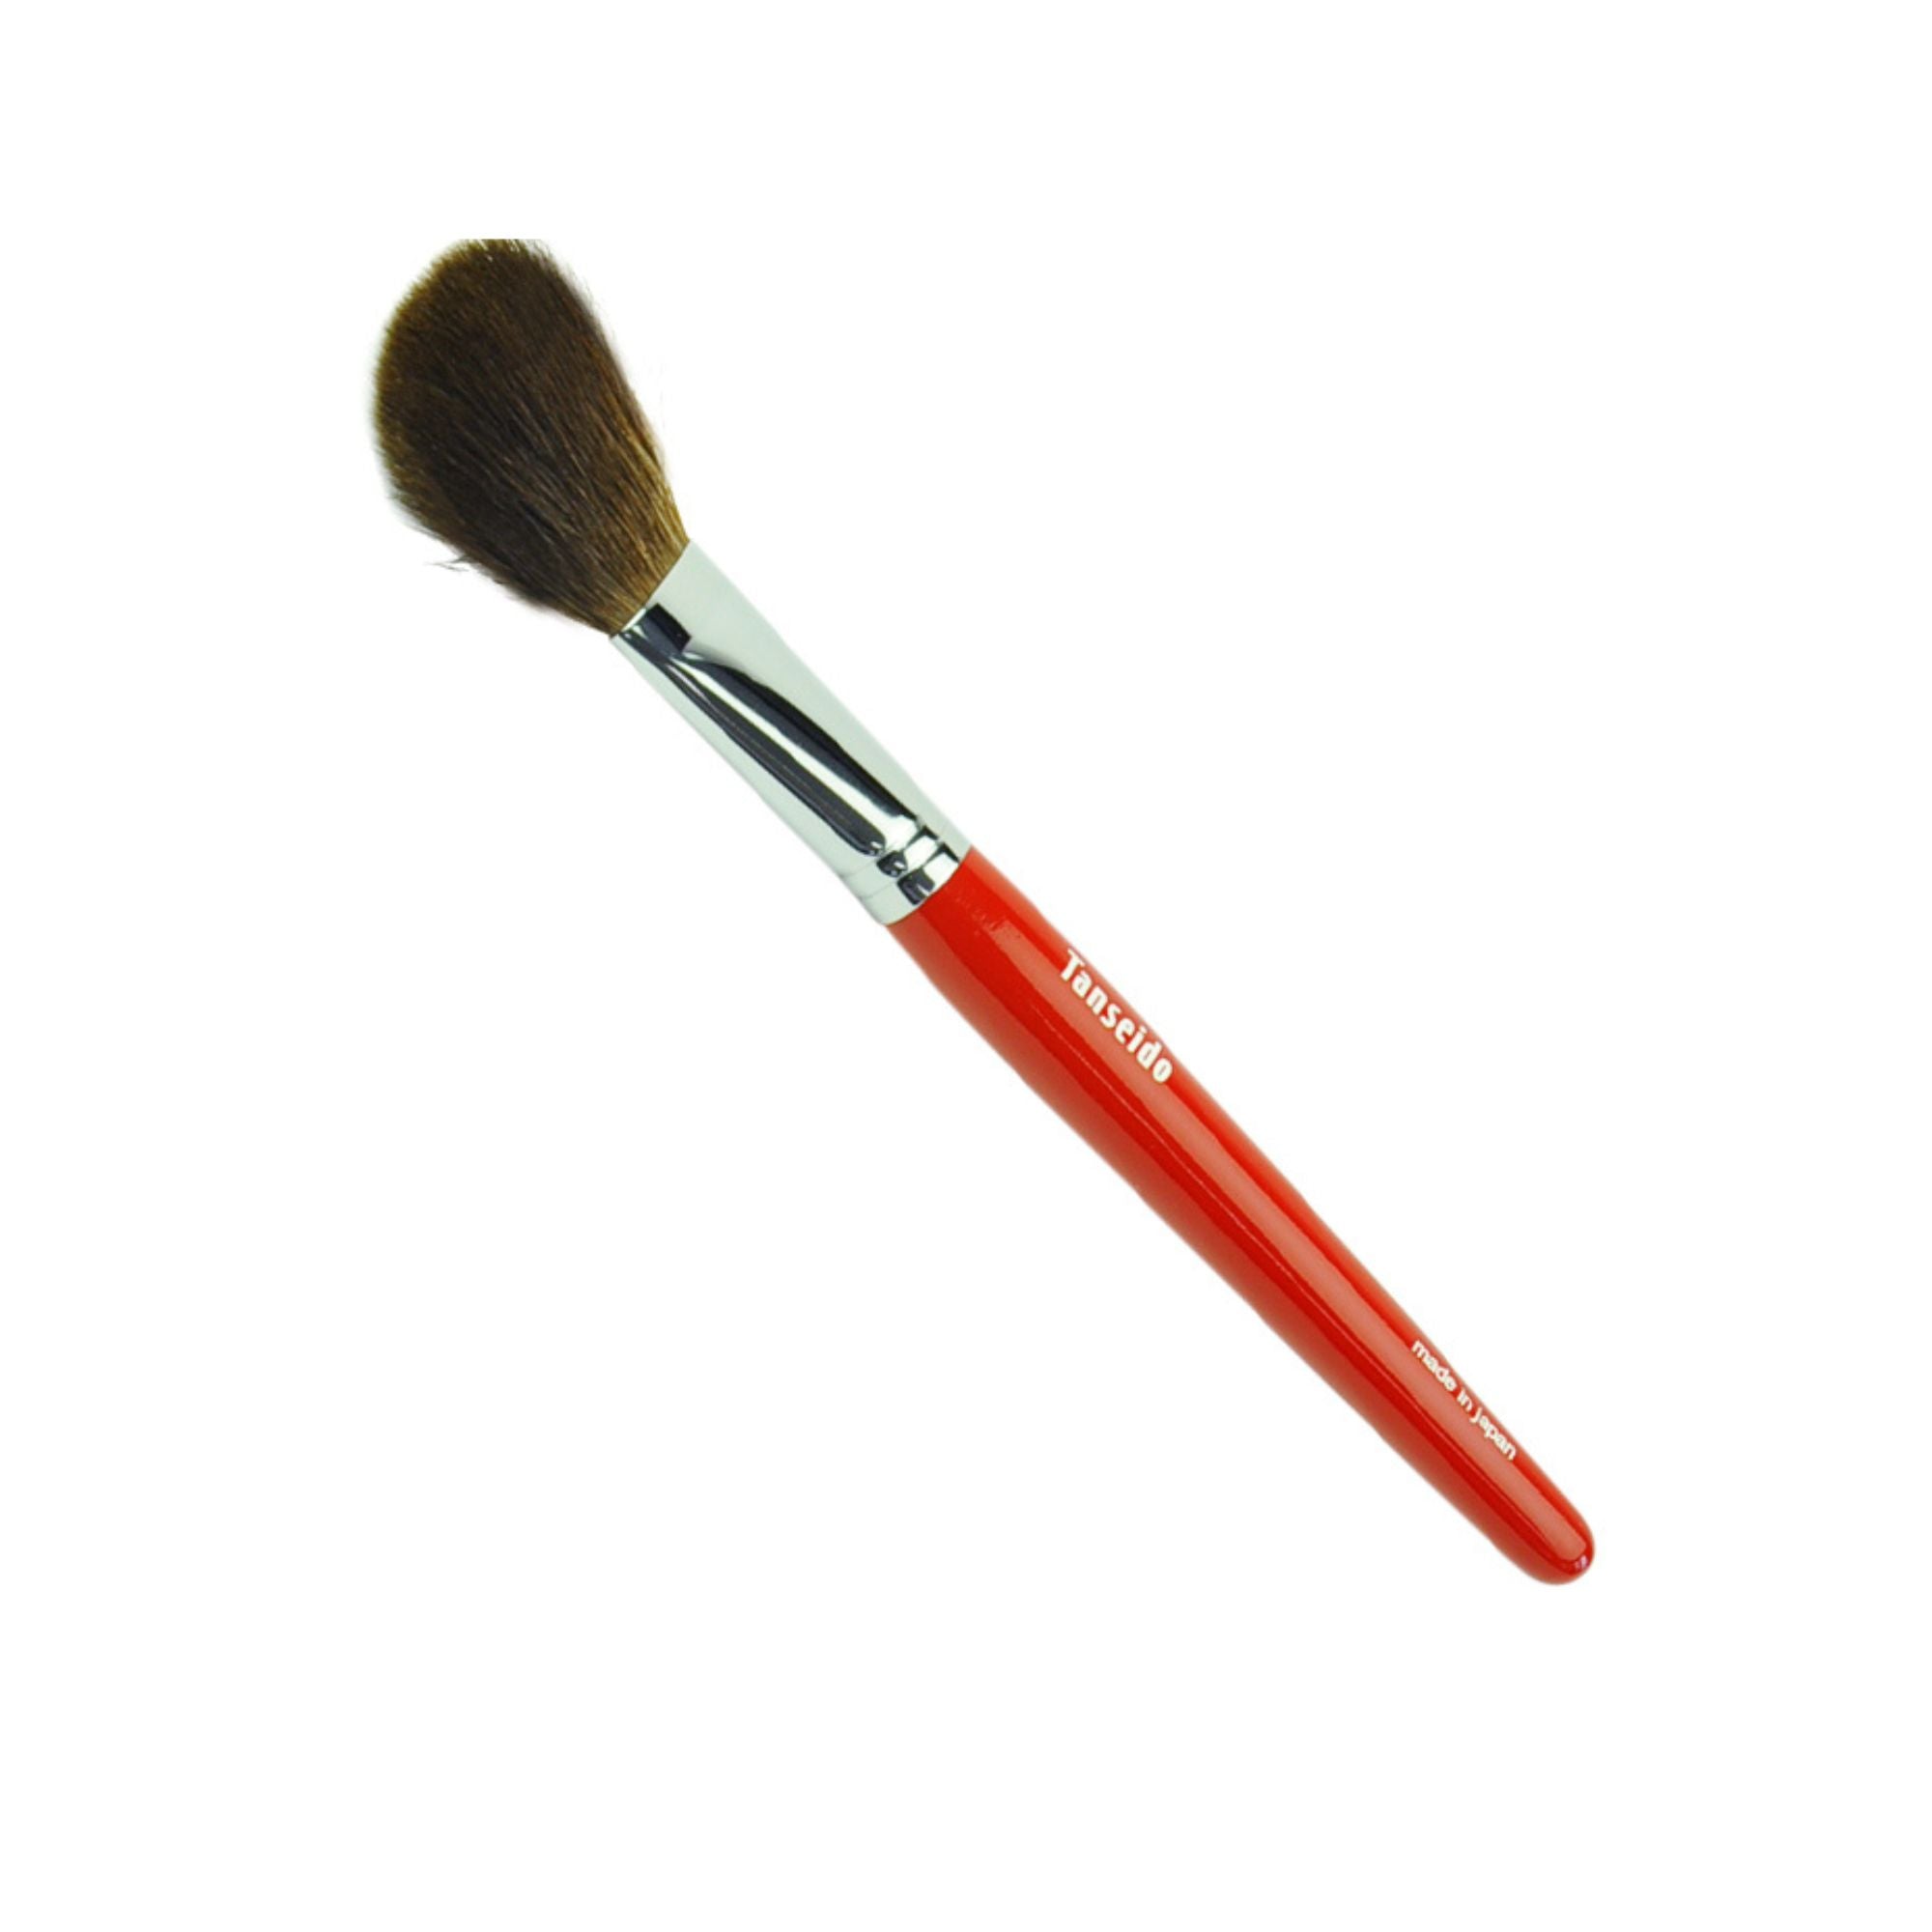 Tanseido SH14 Highlight Brush - Fude Beauty, Japanese Makeup Brushes